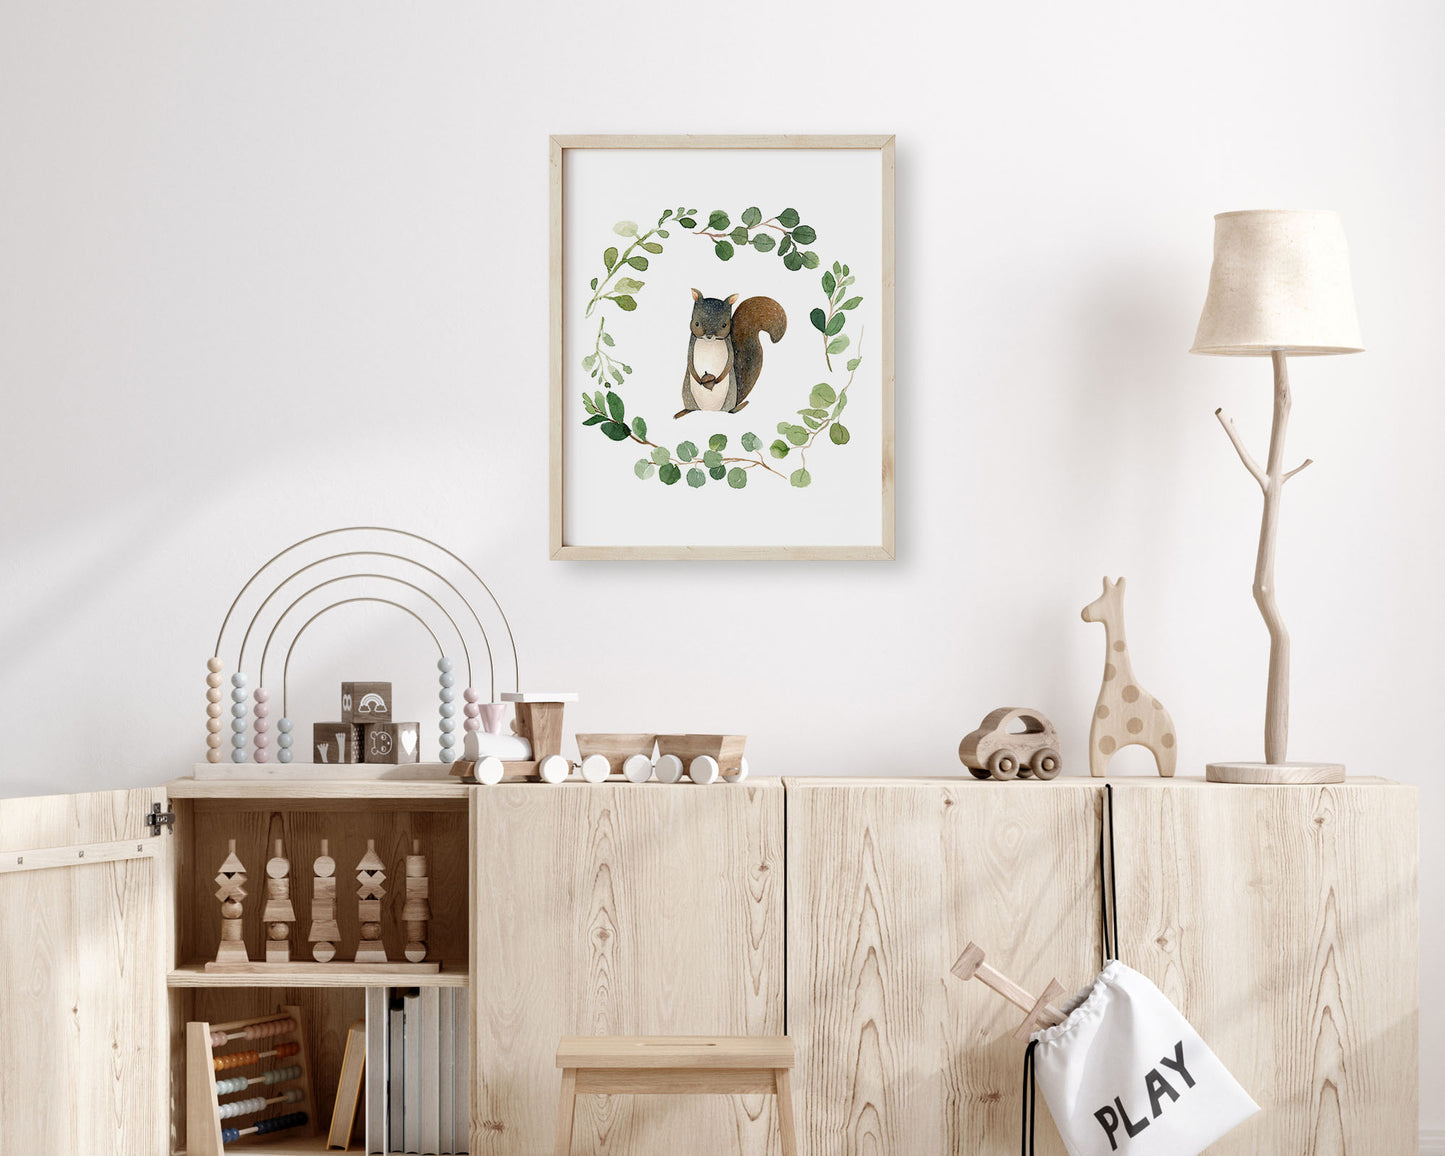 Watercolor Greenery Wreath Squirrel Printable Wall Art, Digital Download